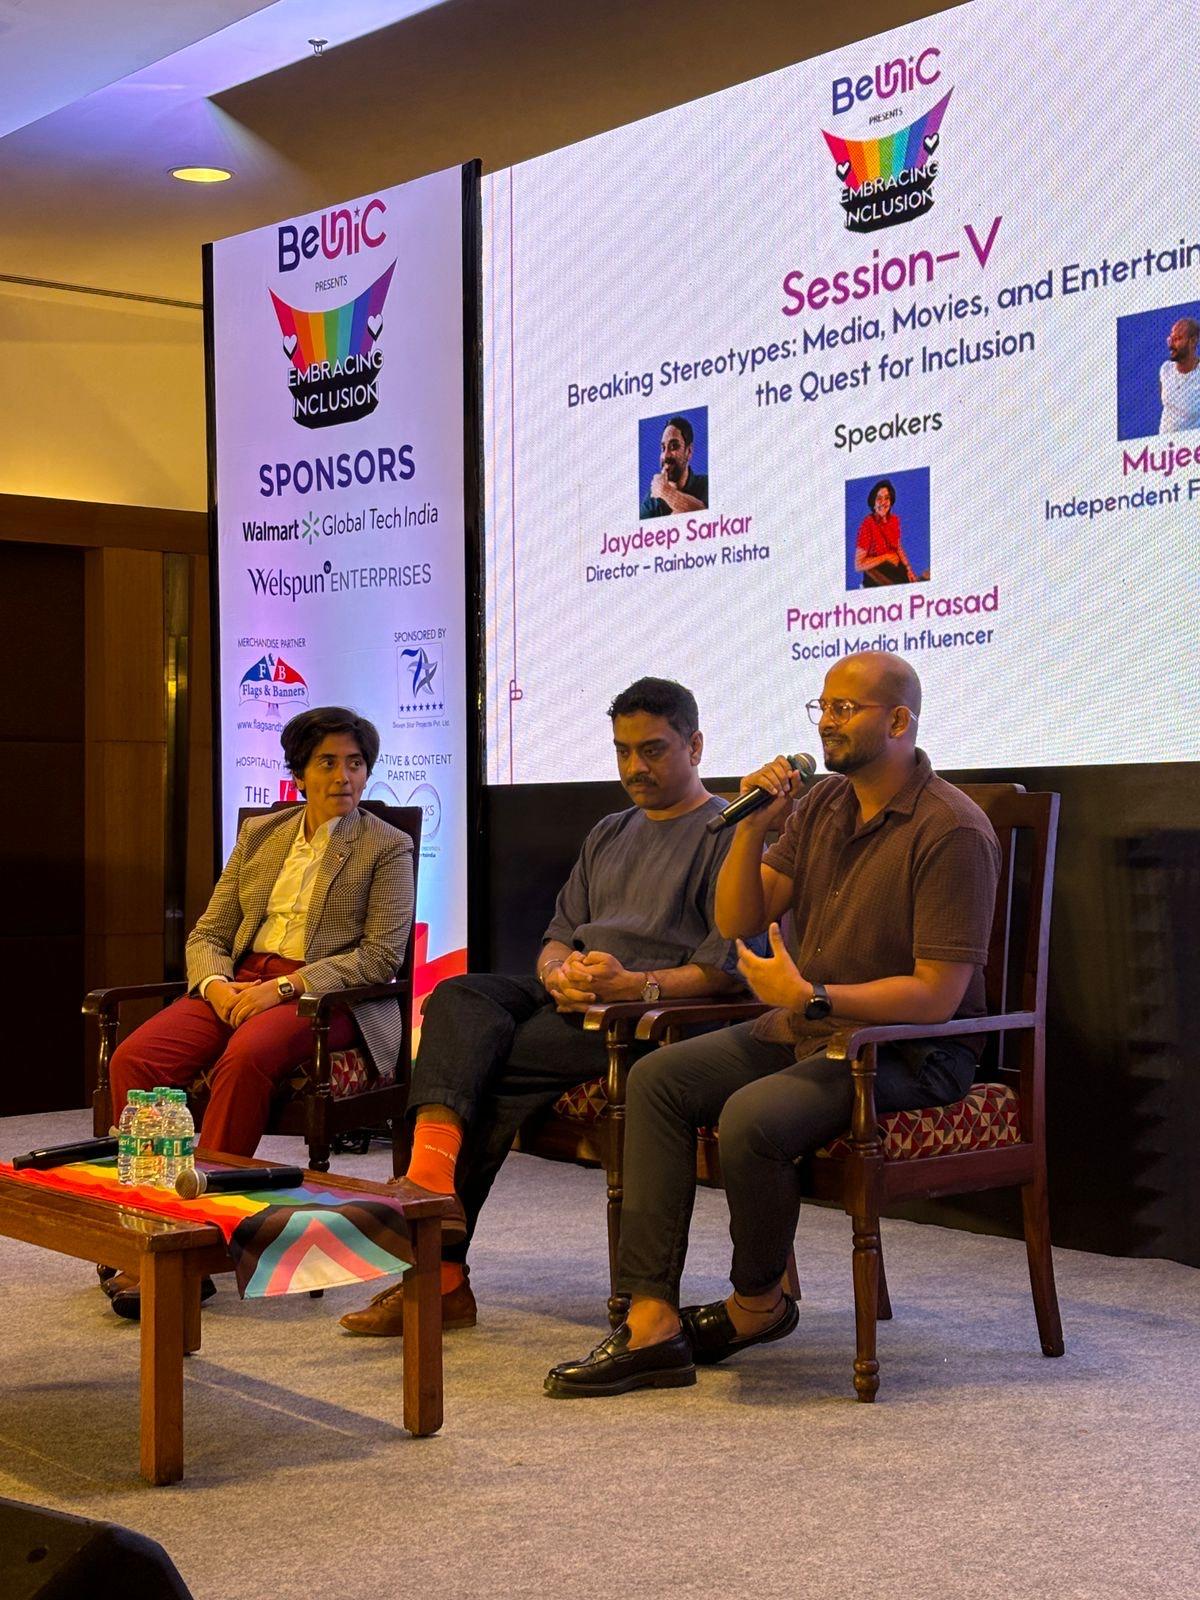 Panelists Prarthna Prasad, Jaydeep Sarkar and Mujeer Pasha discuss Queer Representation in the Indian media and entertainment industry.